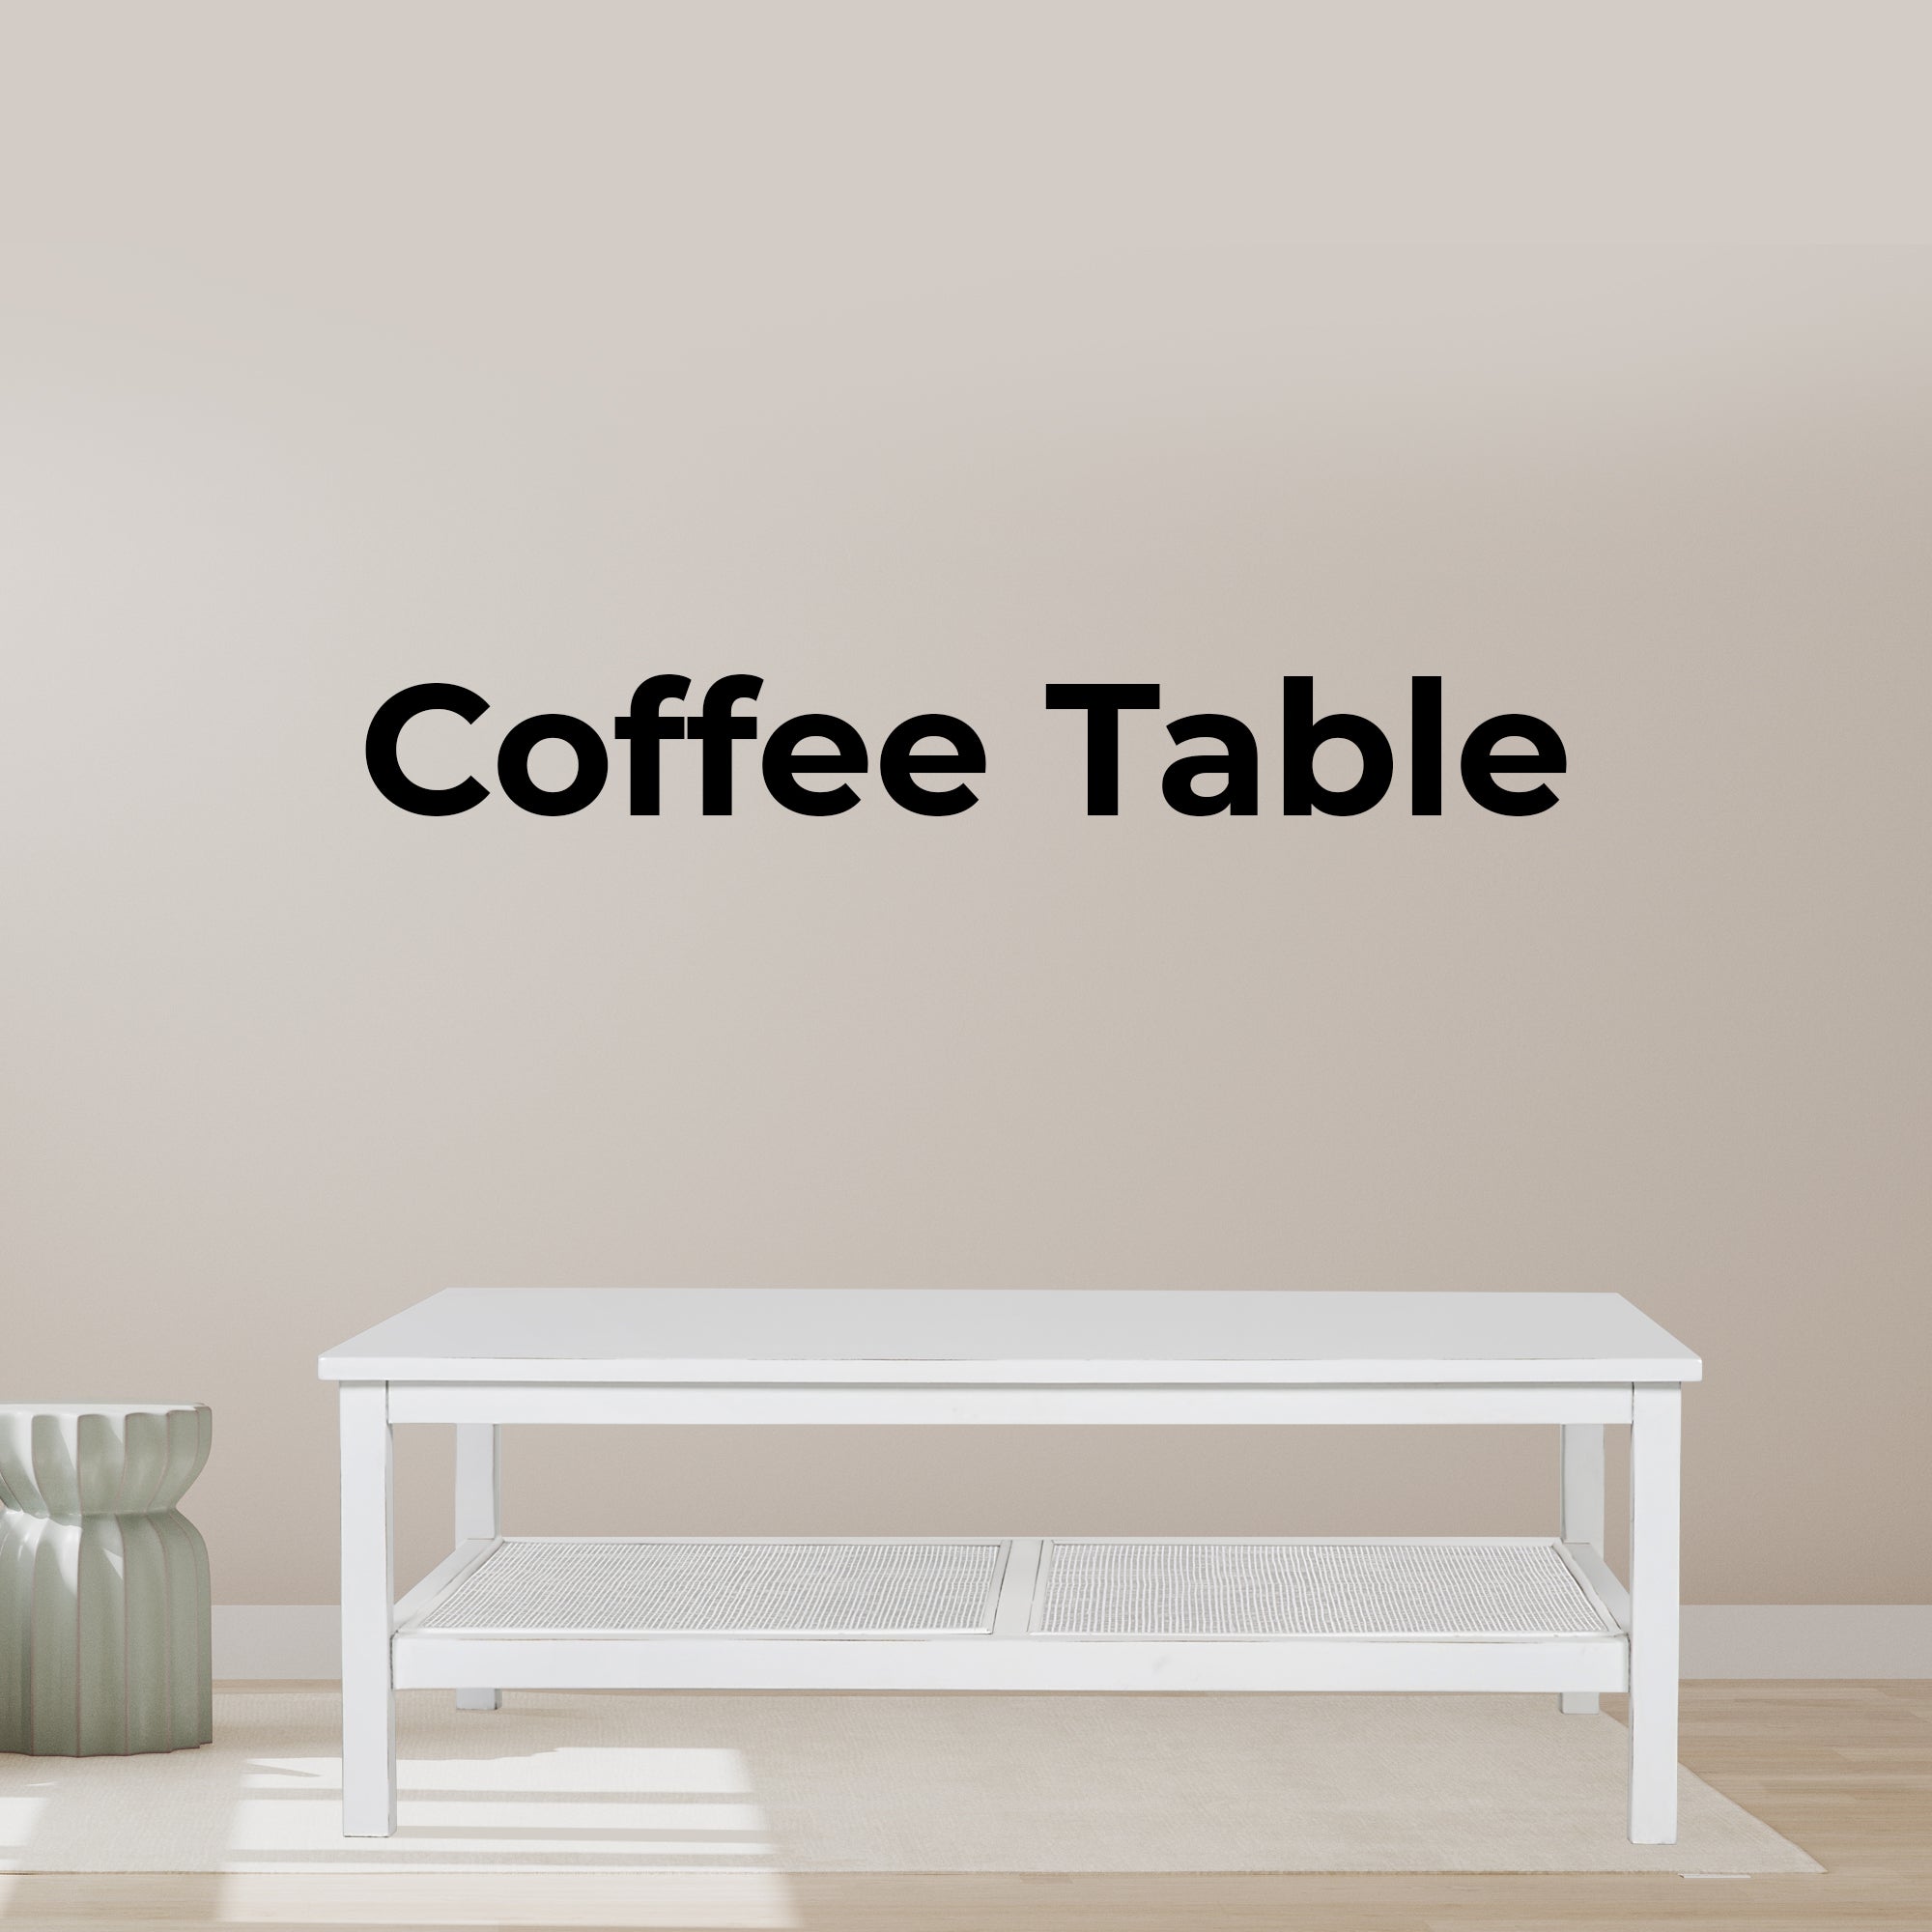 Jasmine Coffee Table 110cm Mindi Timber Wood Rattan Weave - White